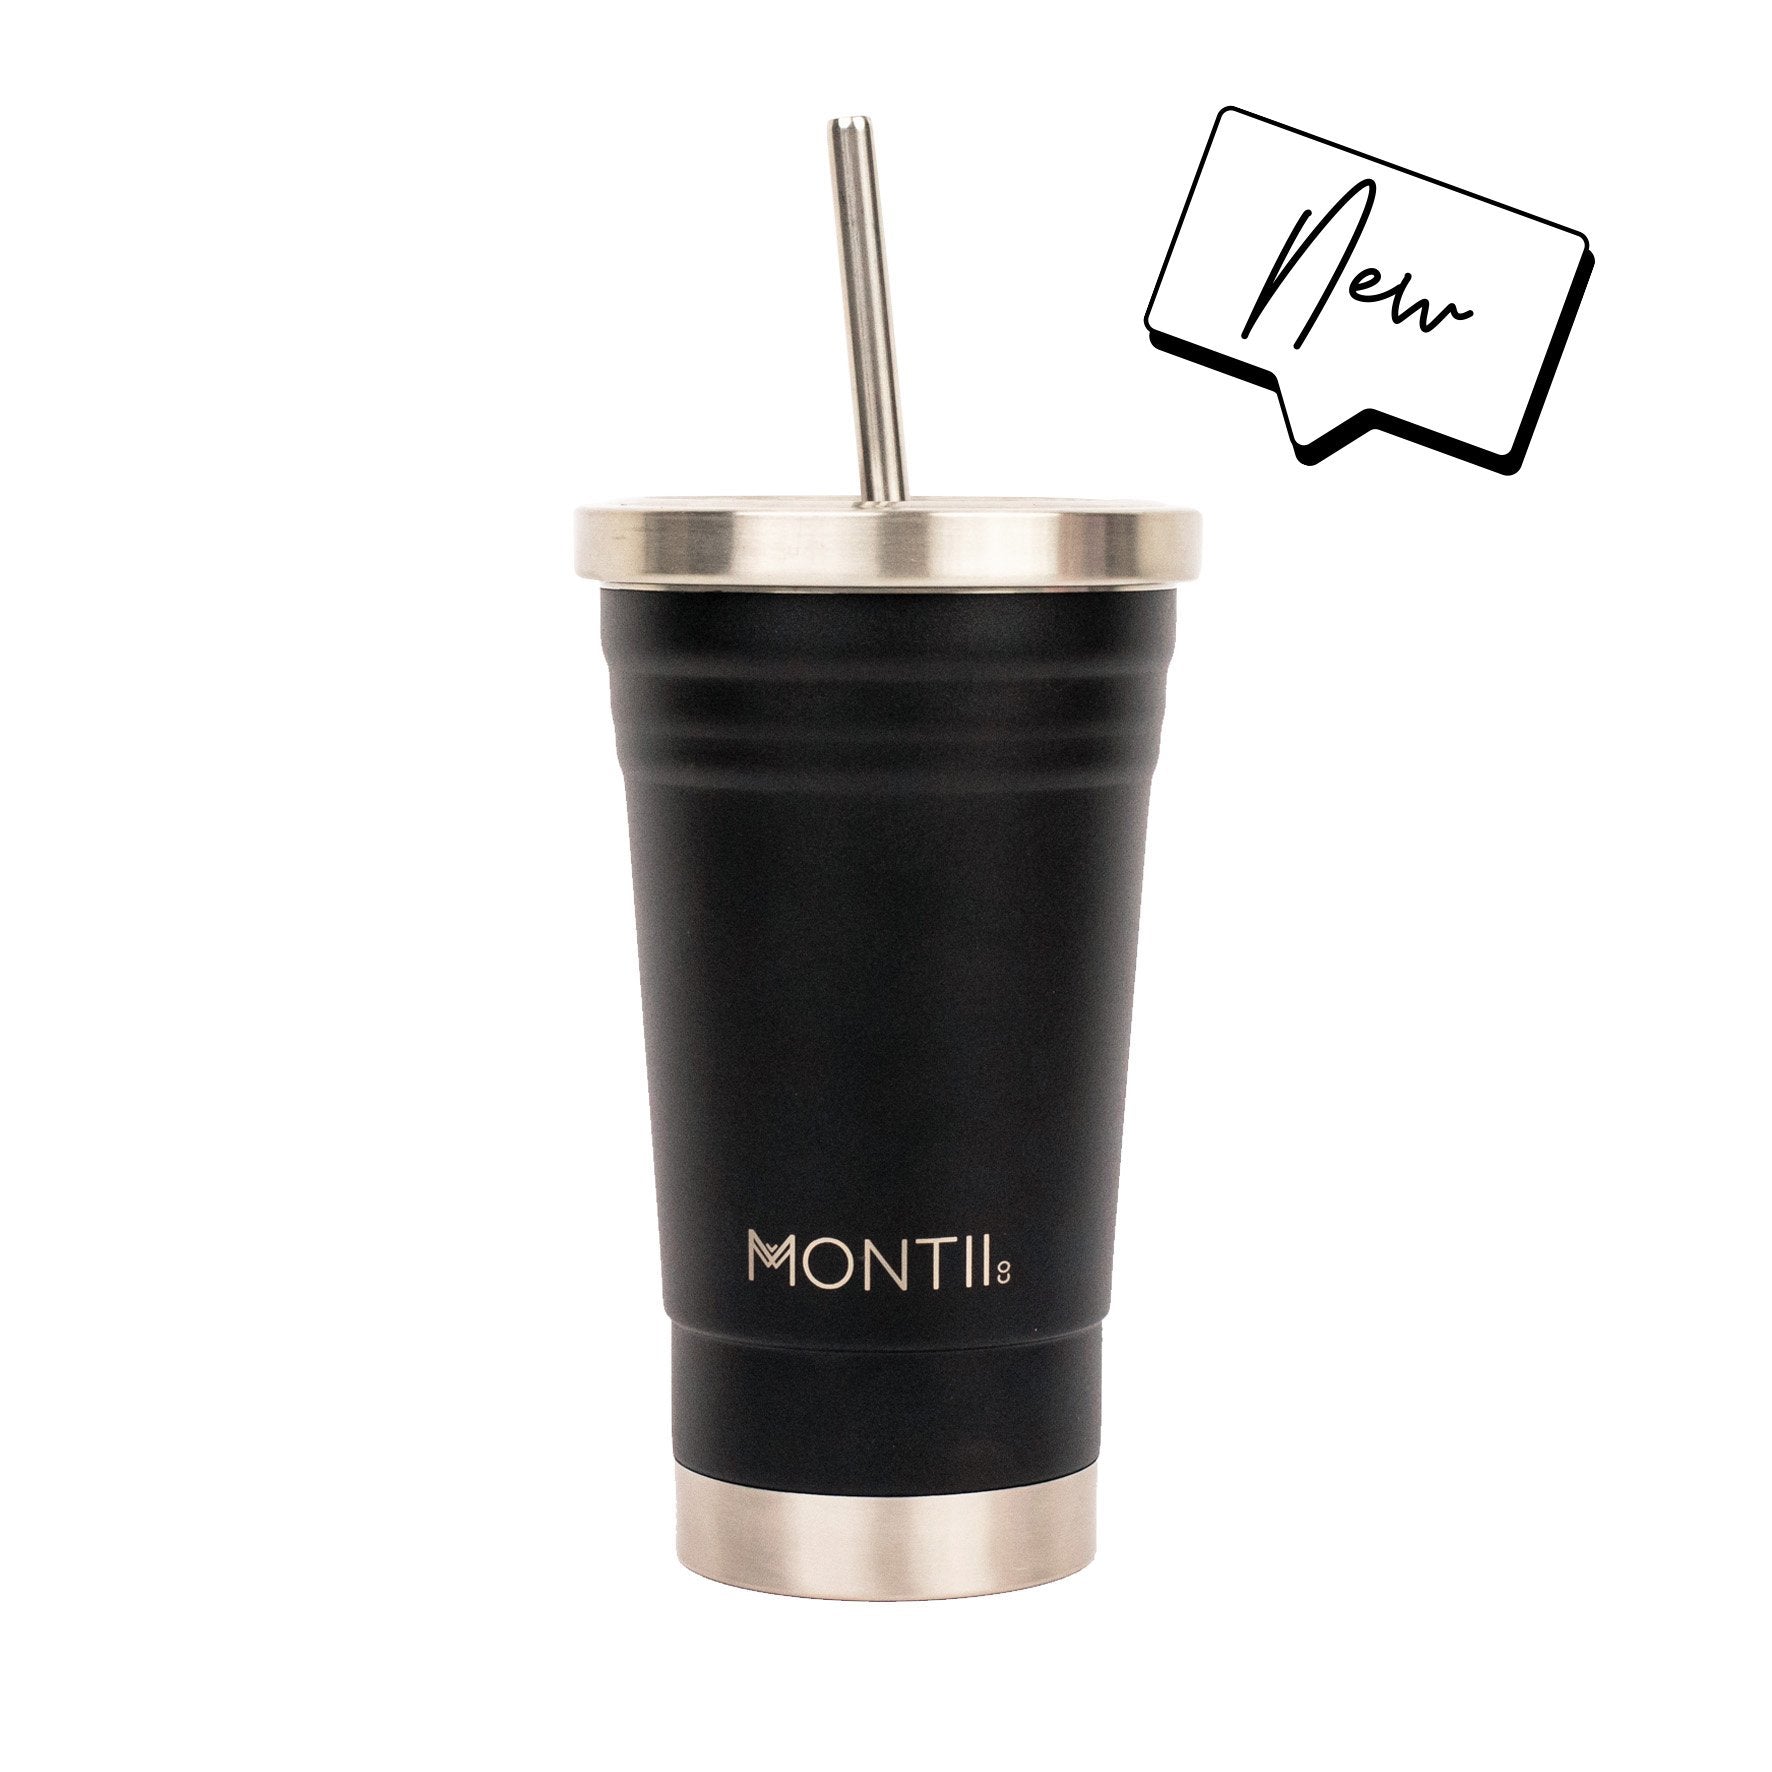 MontiiCo - The Original Smoothie Cup - Black